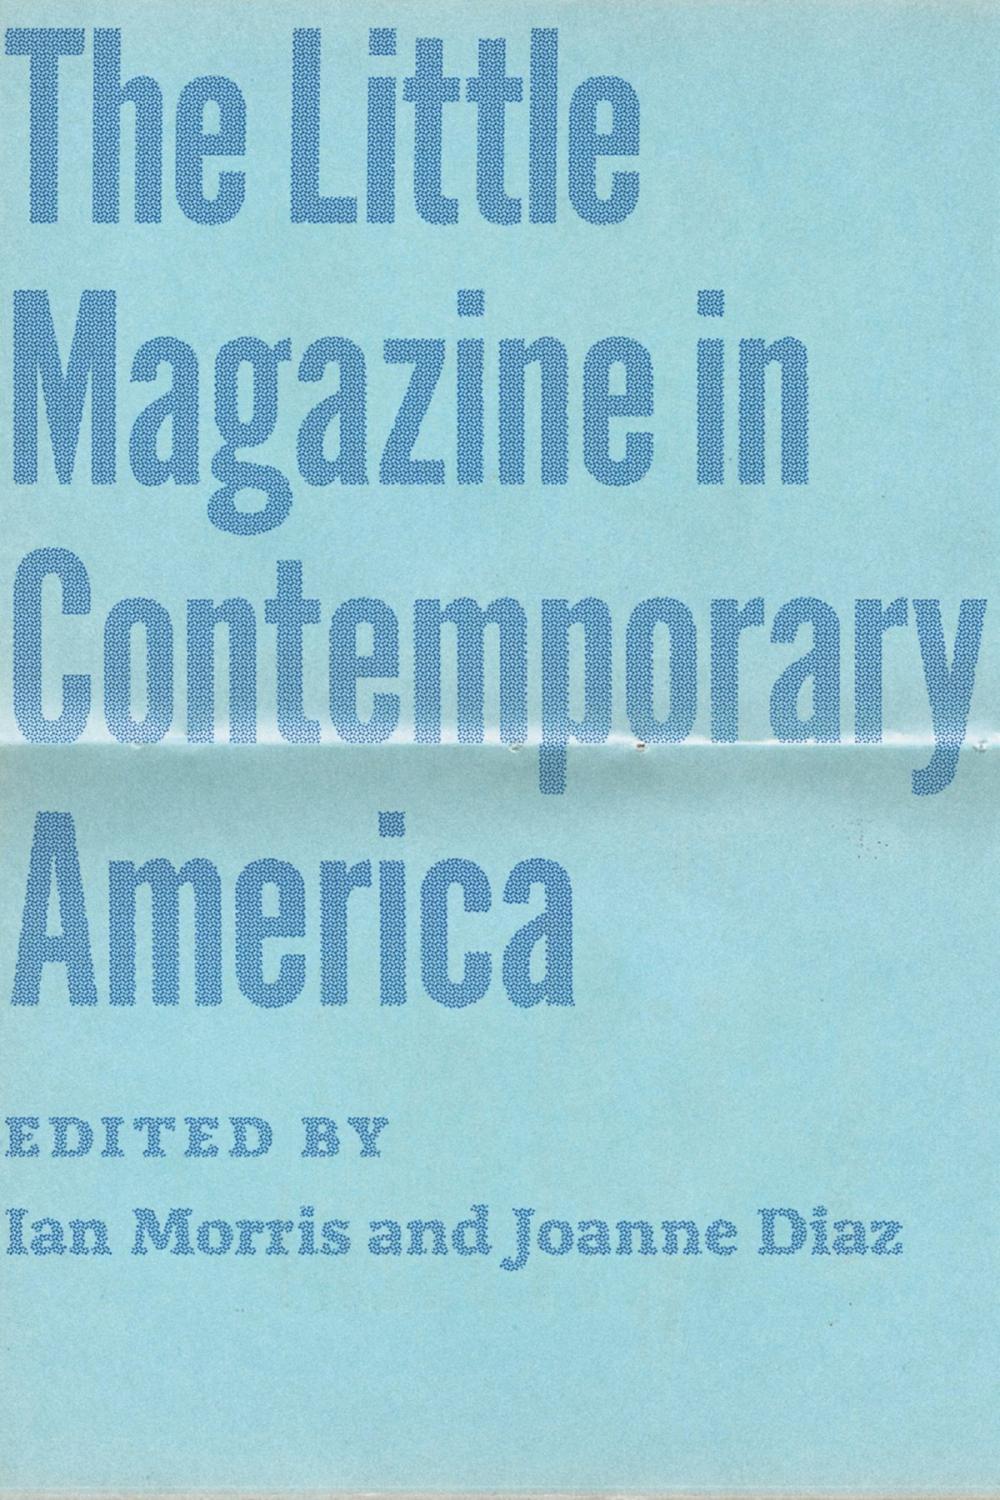 Big bigCover of The Little Magazine in Contemporary America